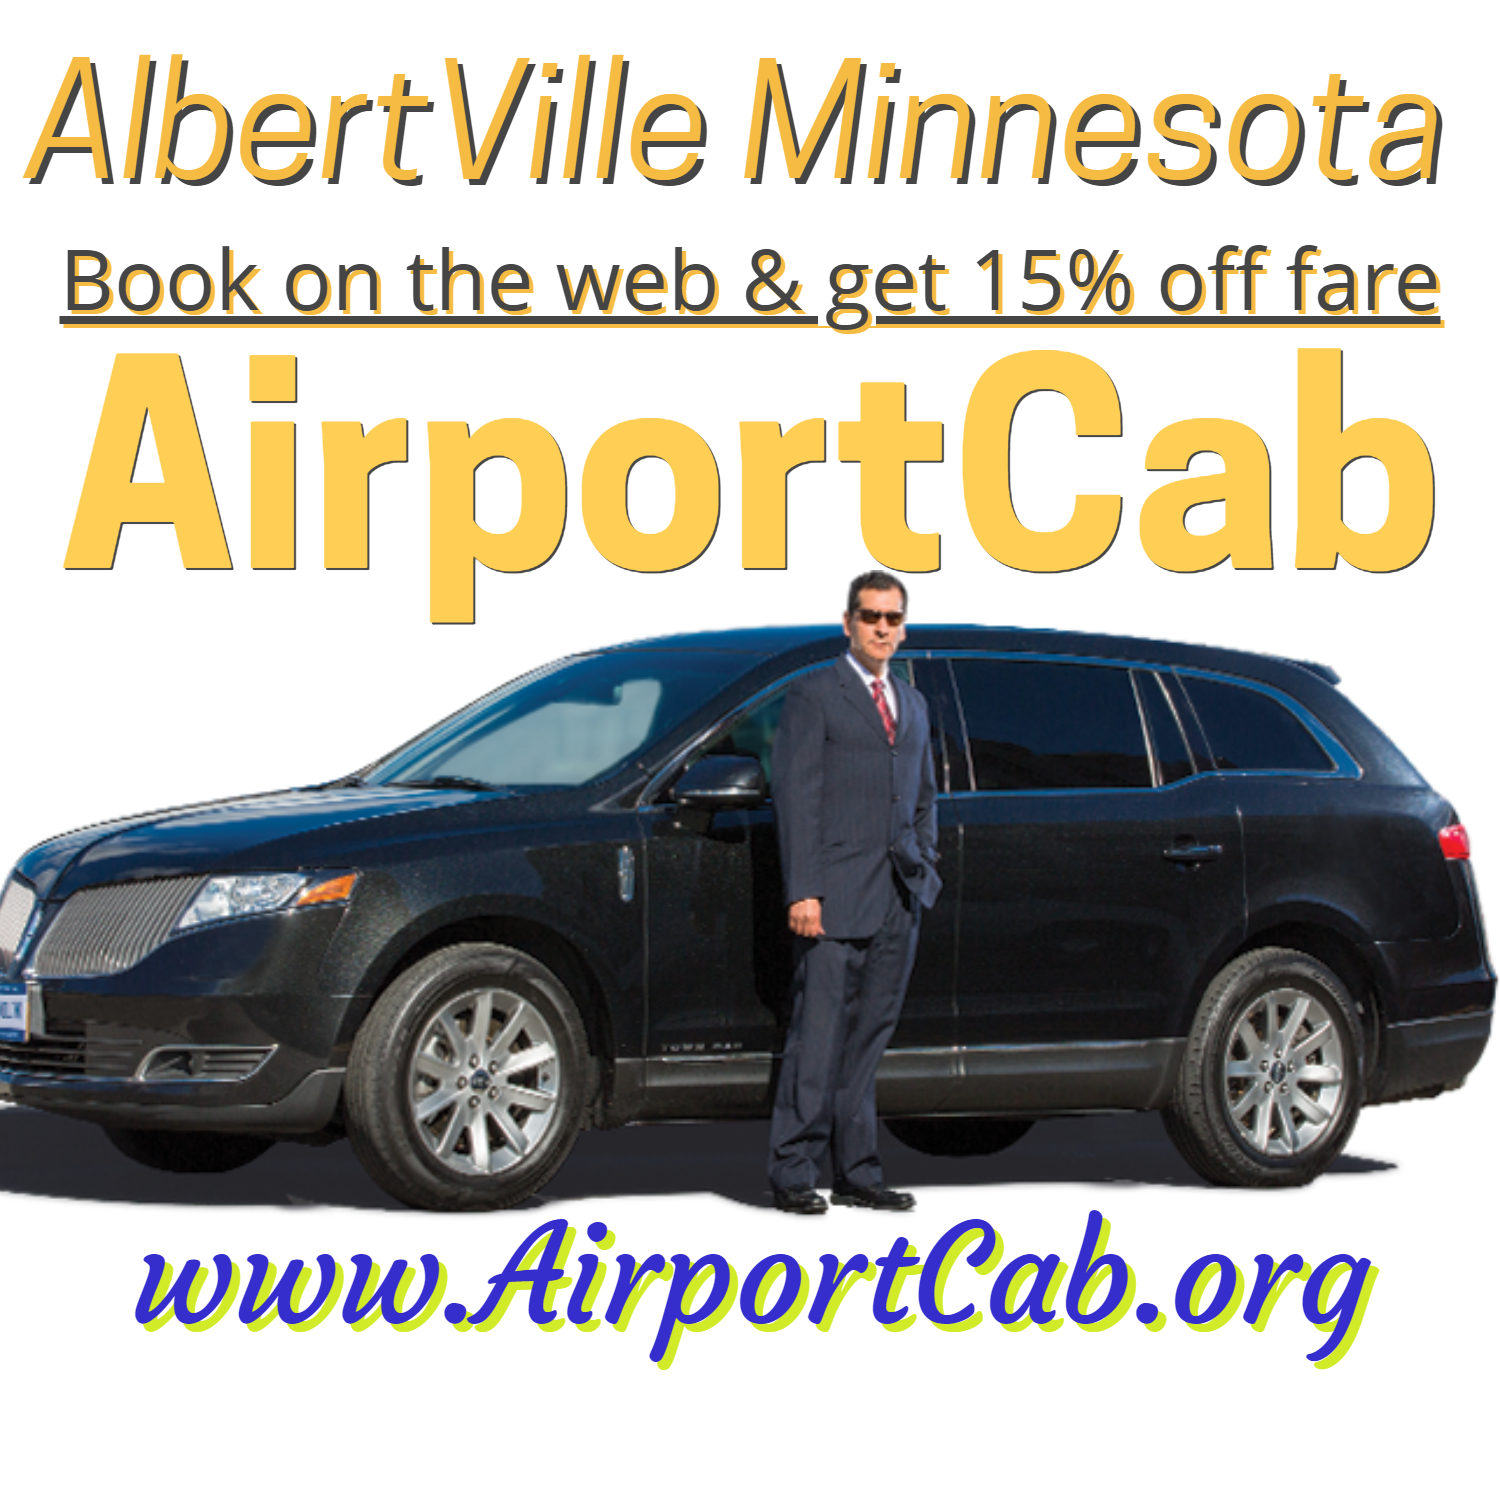 Albertville taxi Cab Service